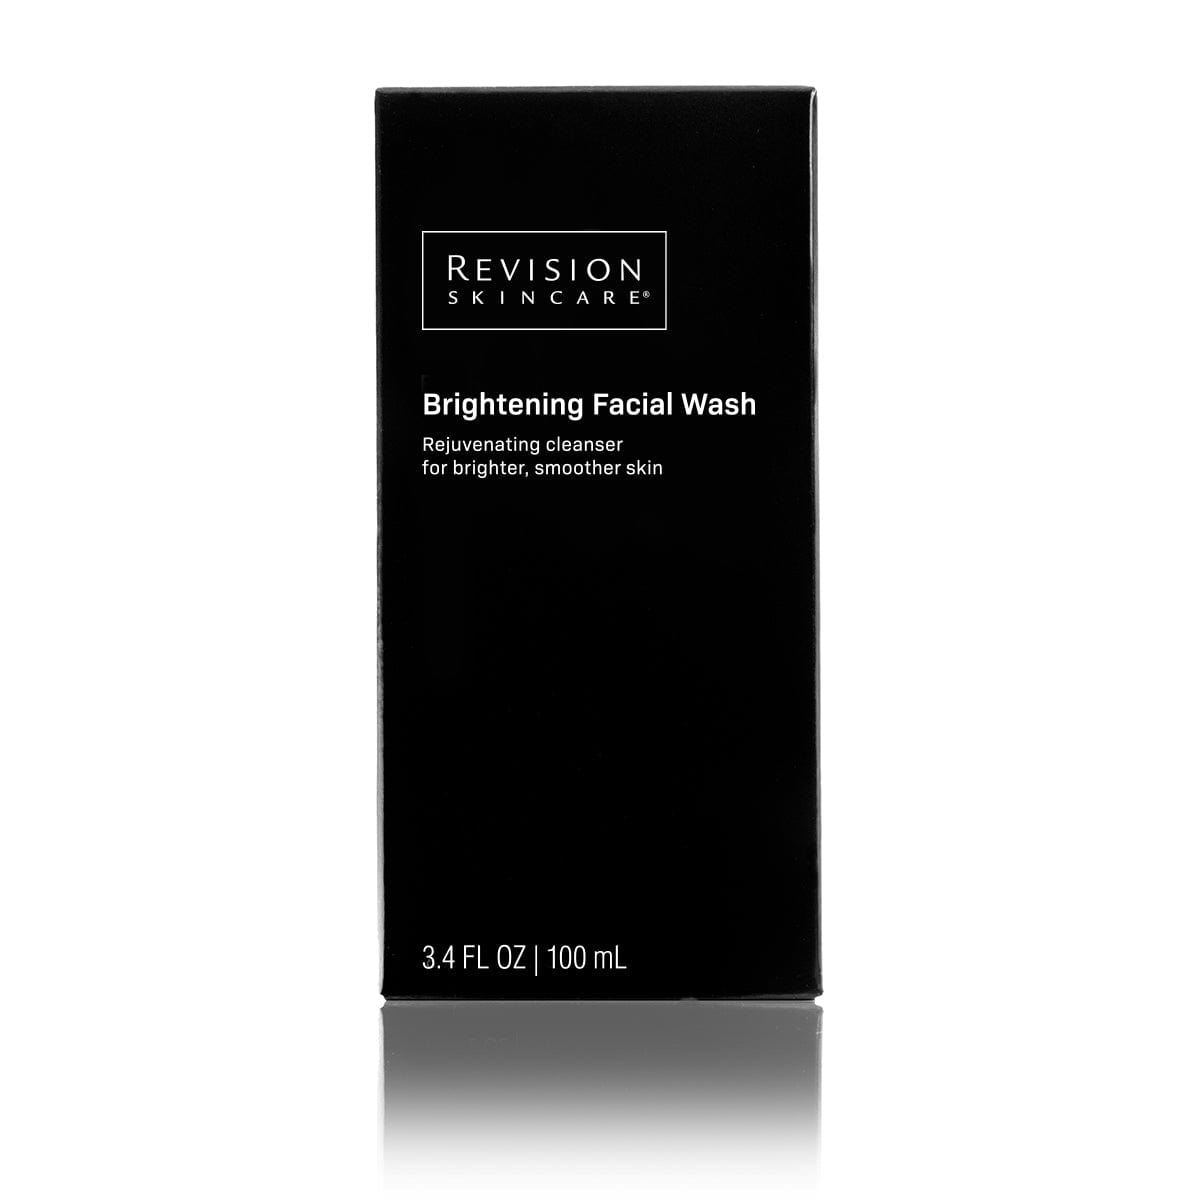 Brightening Facial Wash bottle- rejuvenating cleanser for brighter, smoother skin. Box Front